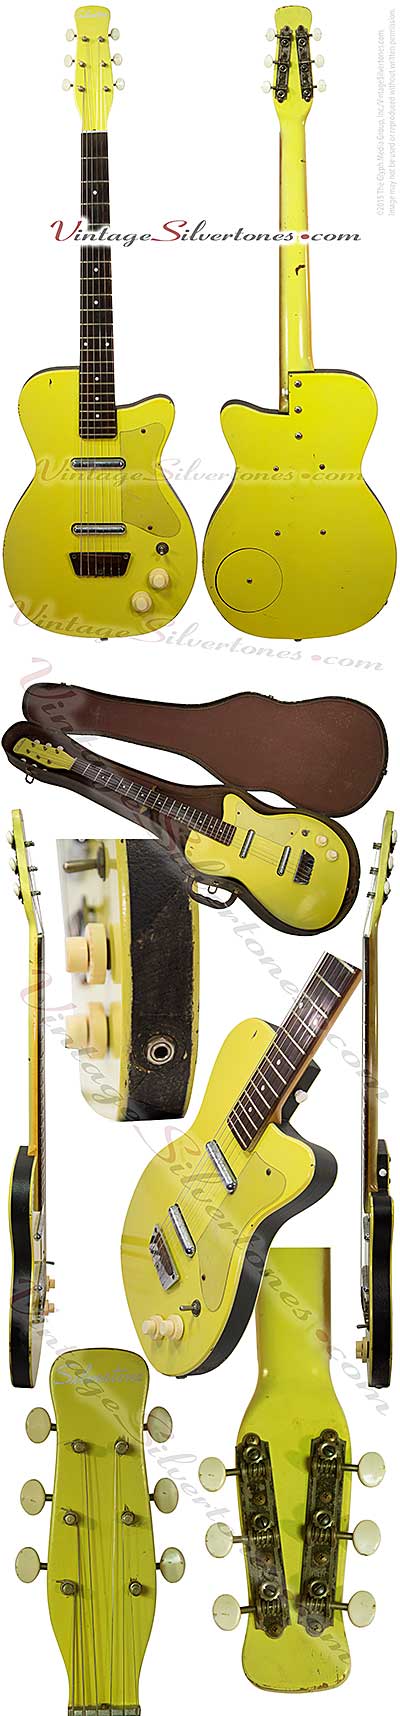 Silvertone 1360 made by Danelectro U2, two pickup, electric guitar, semi-hollow body, yellow body with black vinyl binding, masonite body, lipstick pickup, made in 1955